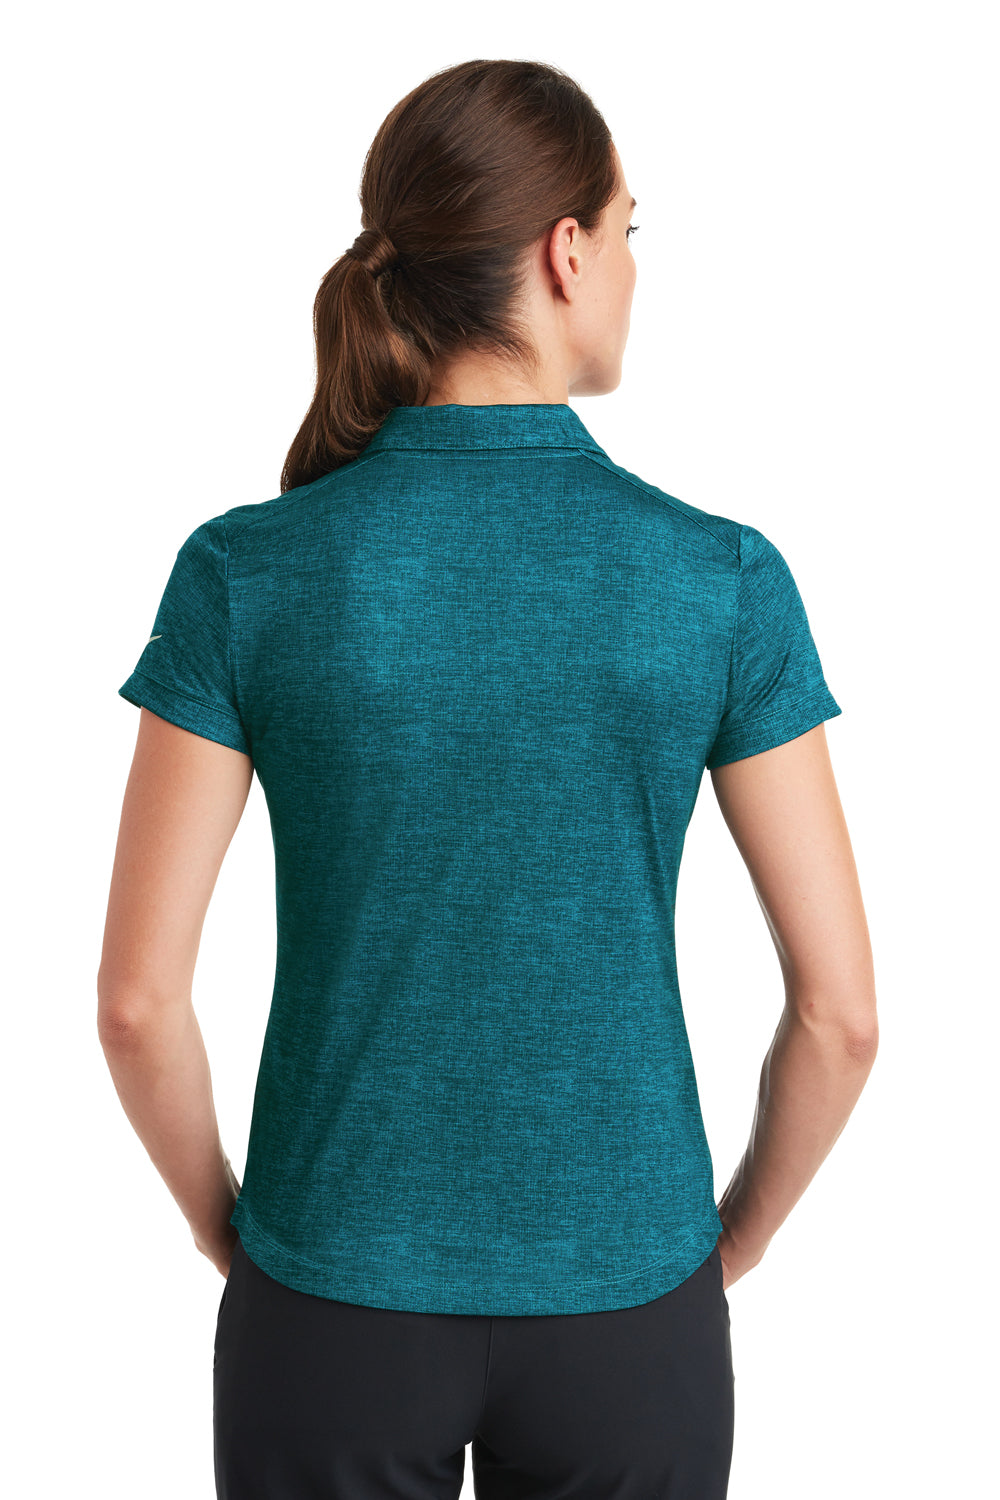 Nike 838961 Womens Dri-Fit Moisture Wicking Short Sleeve Polo Shirt Blustery Green Model Back